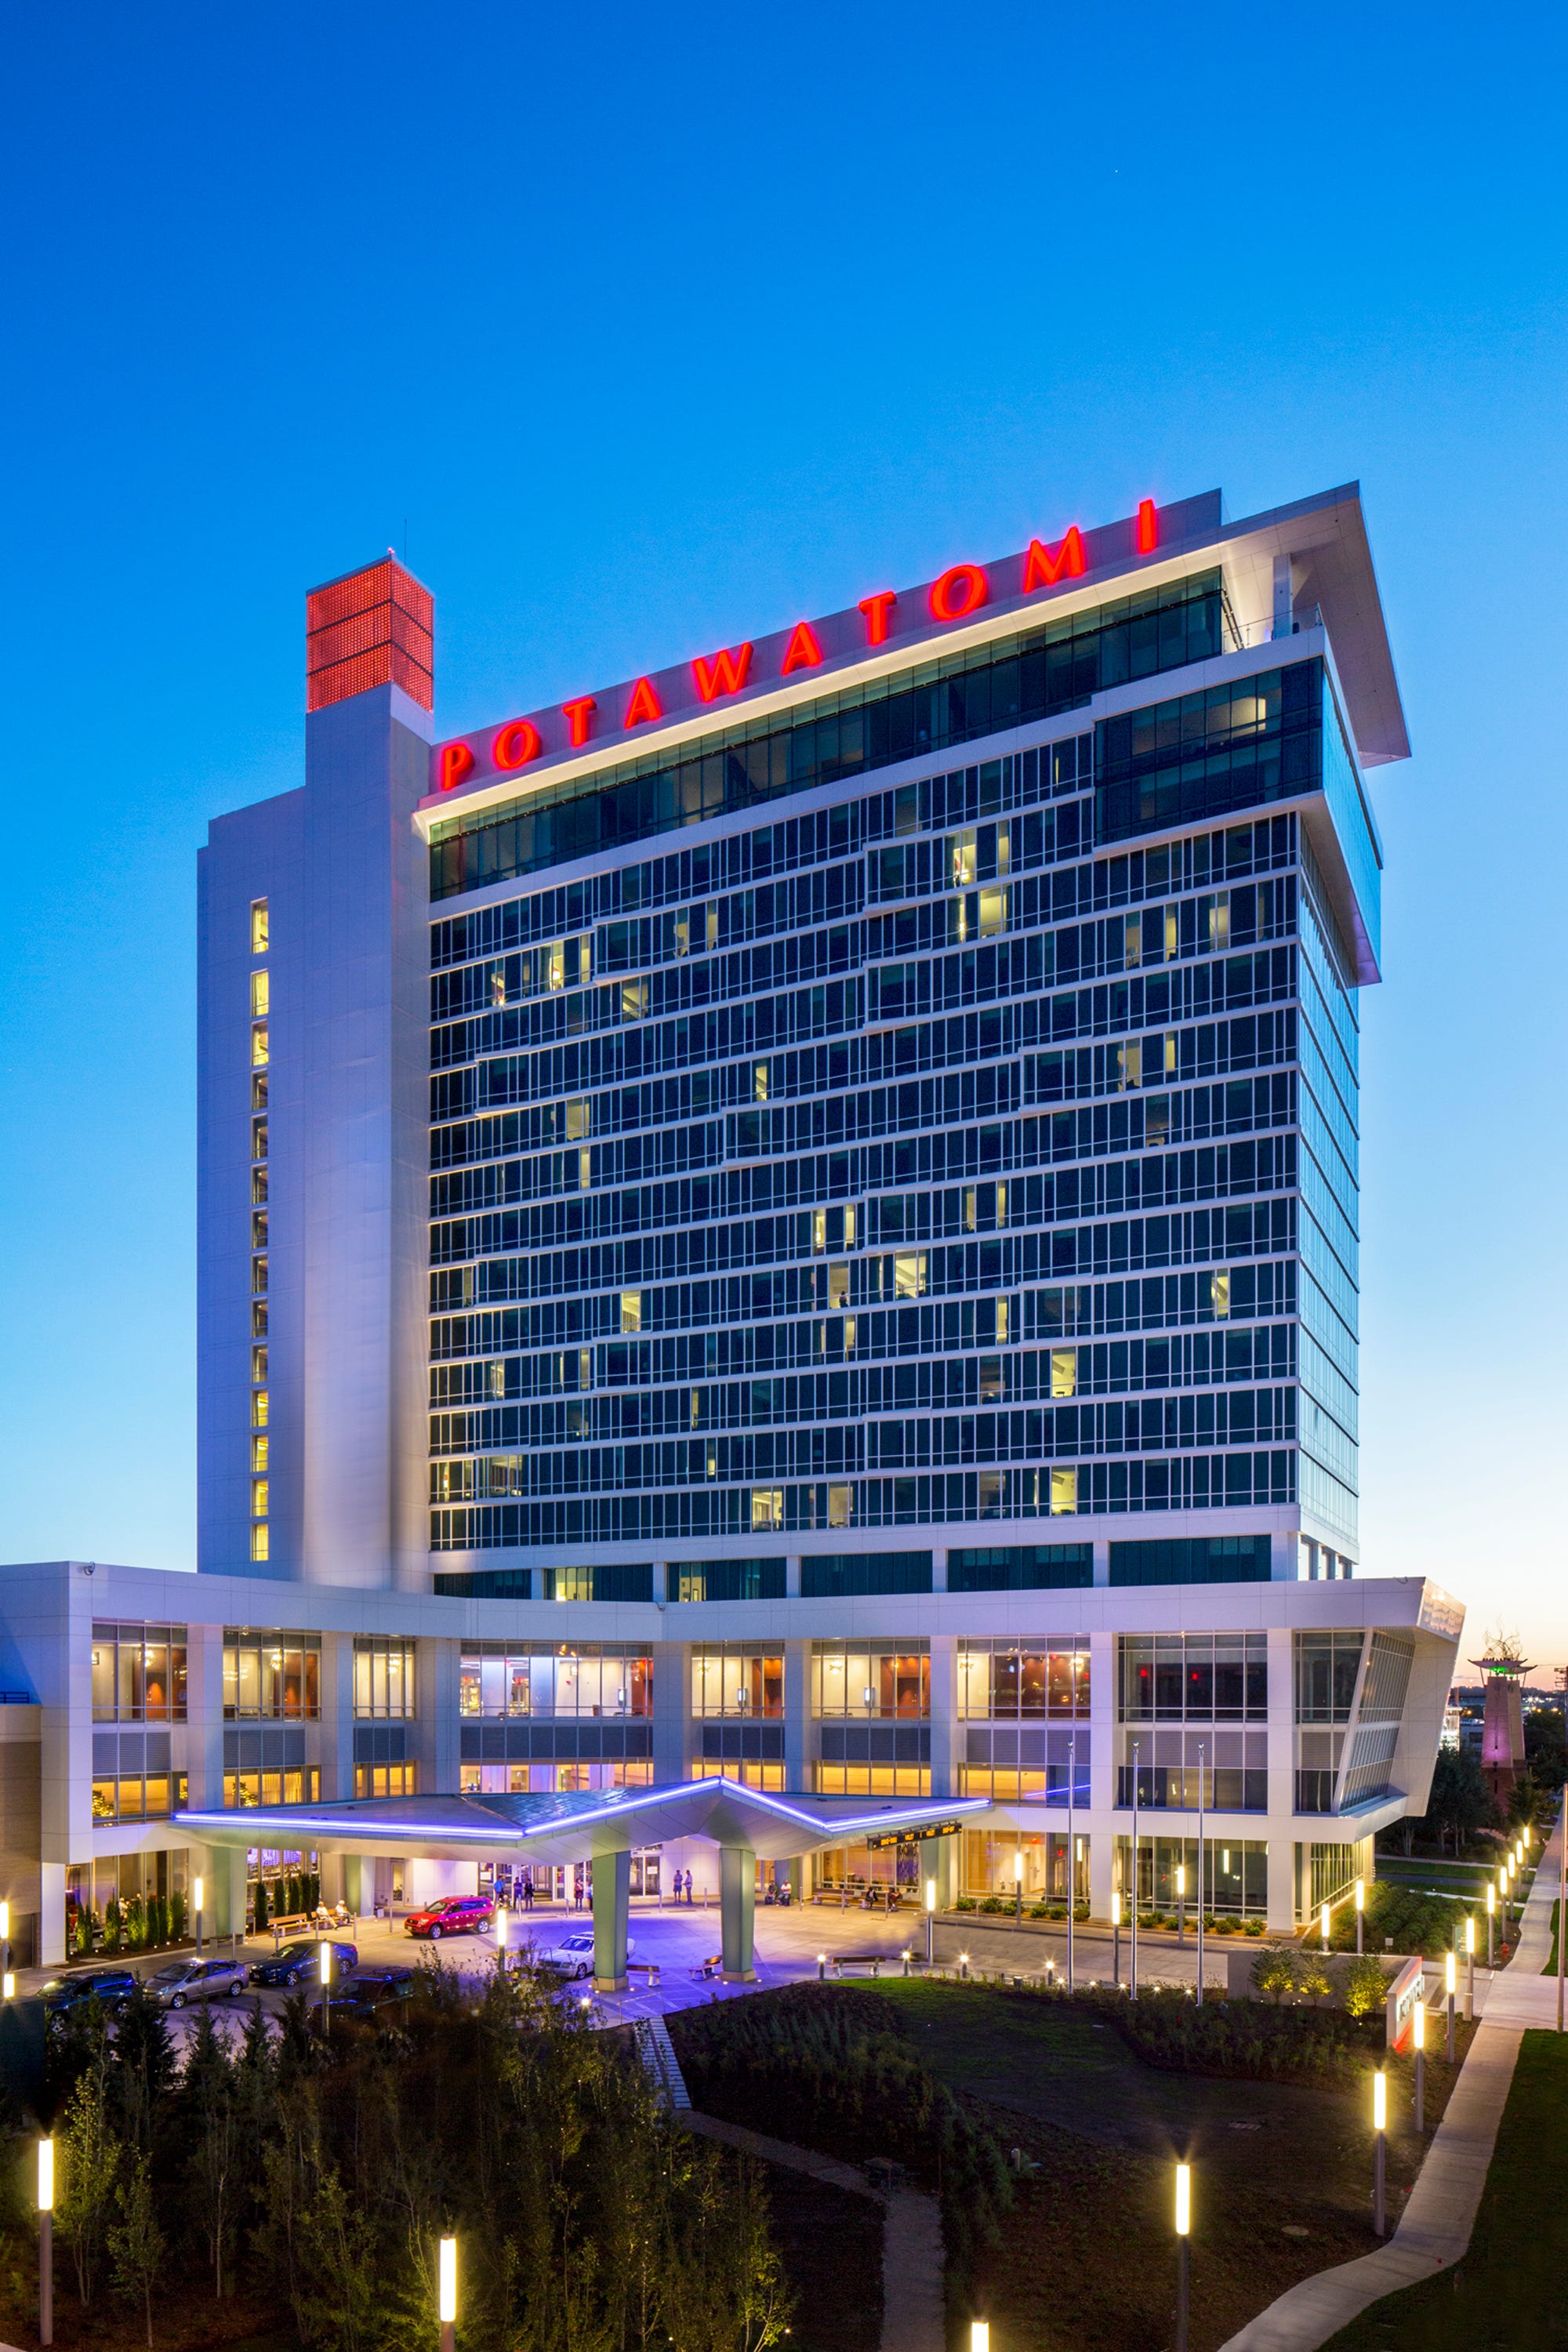 potawatomi hotel casino restaurants